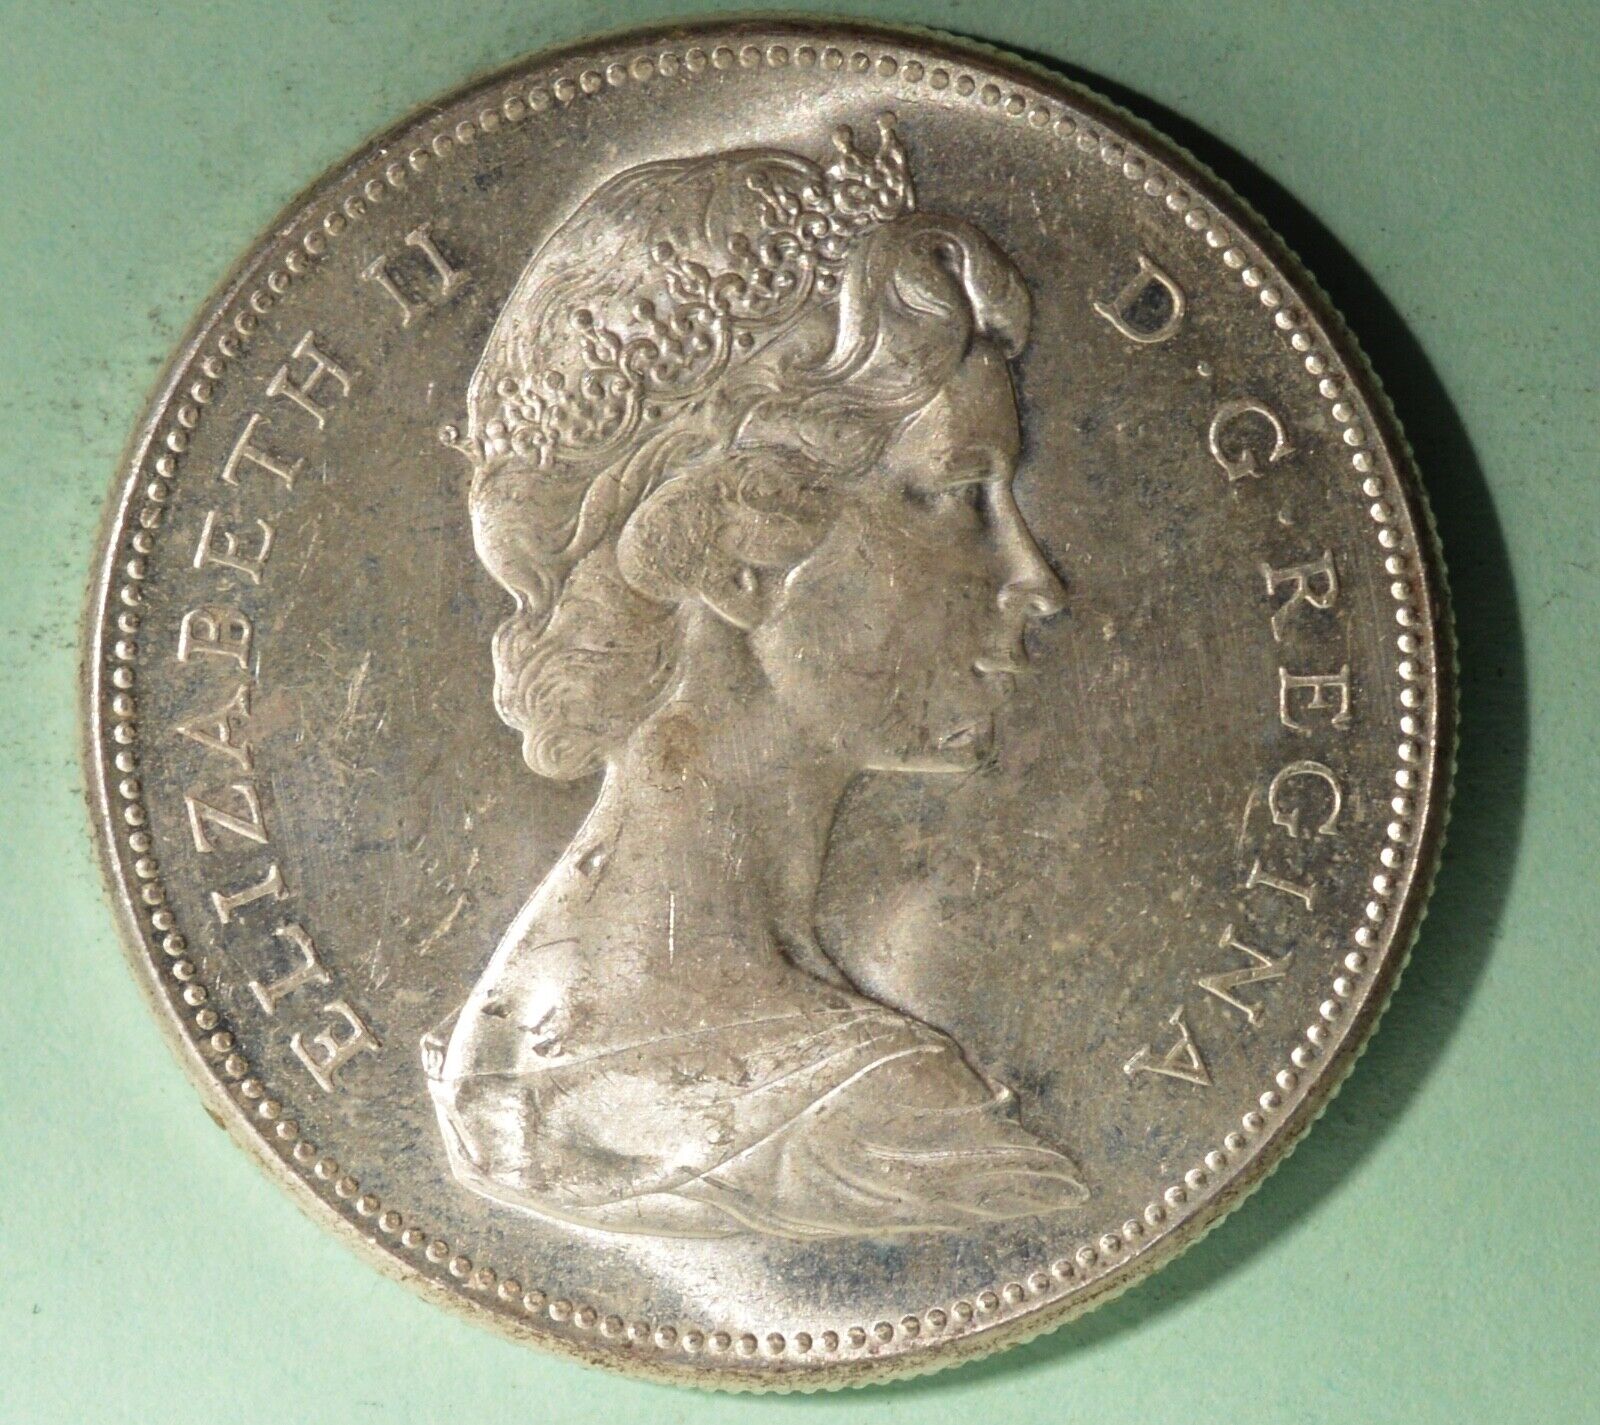 1967 Canada Silver Dollar - Average Circulated -  .800 FINE